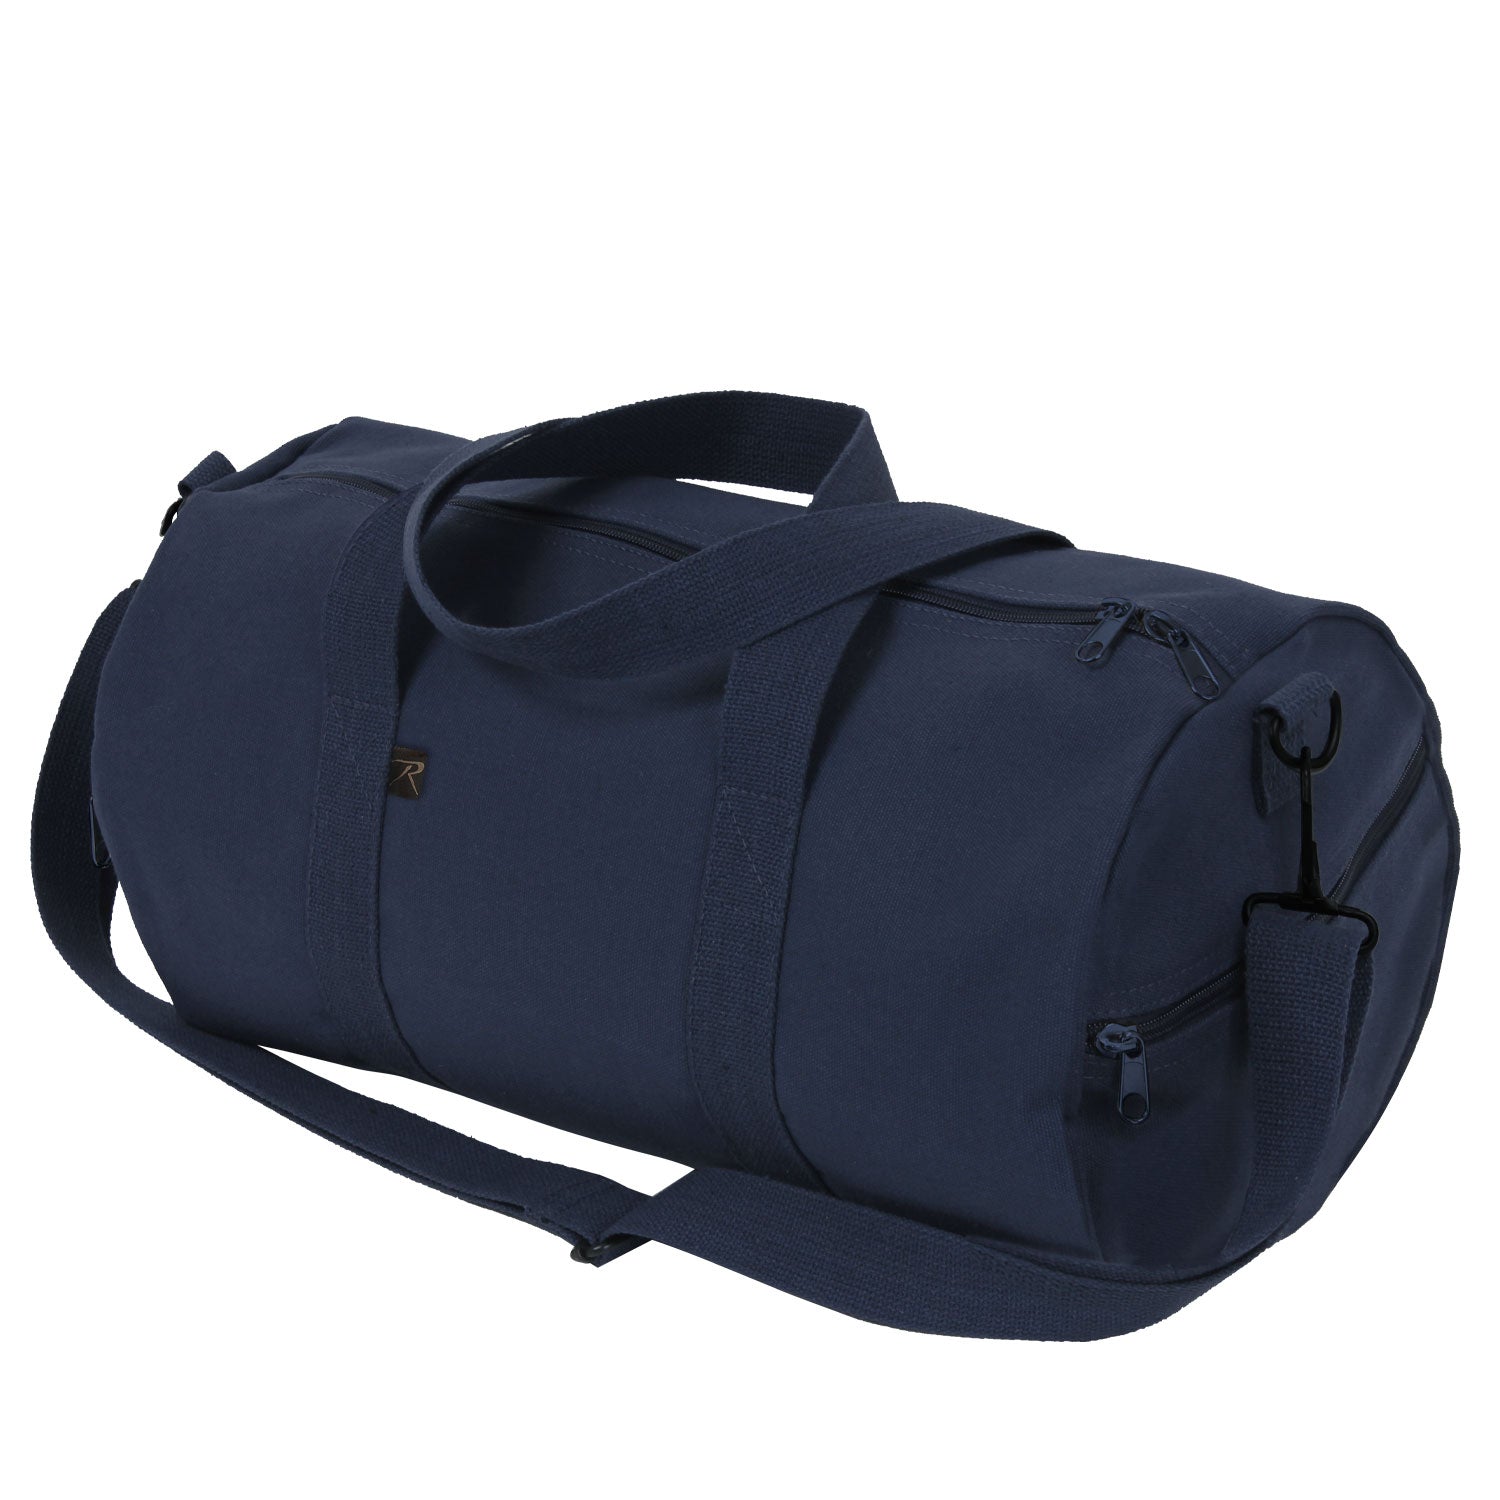 Milspec Canvas Shoulder Duffle Bag - 19 Inch Gifts For Him MilTac Tactical Military Outdoor Gear Australia